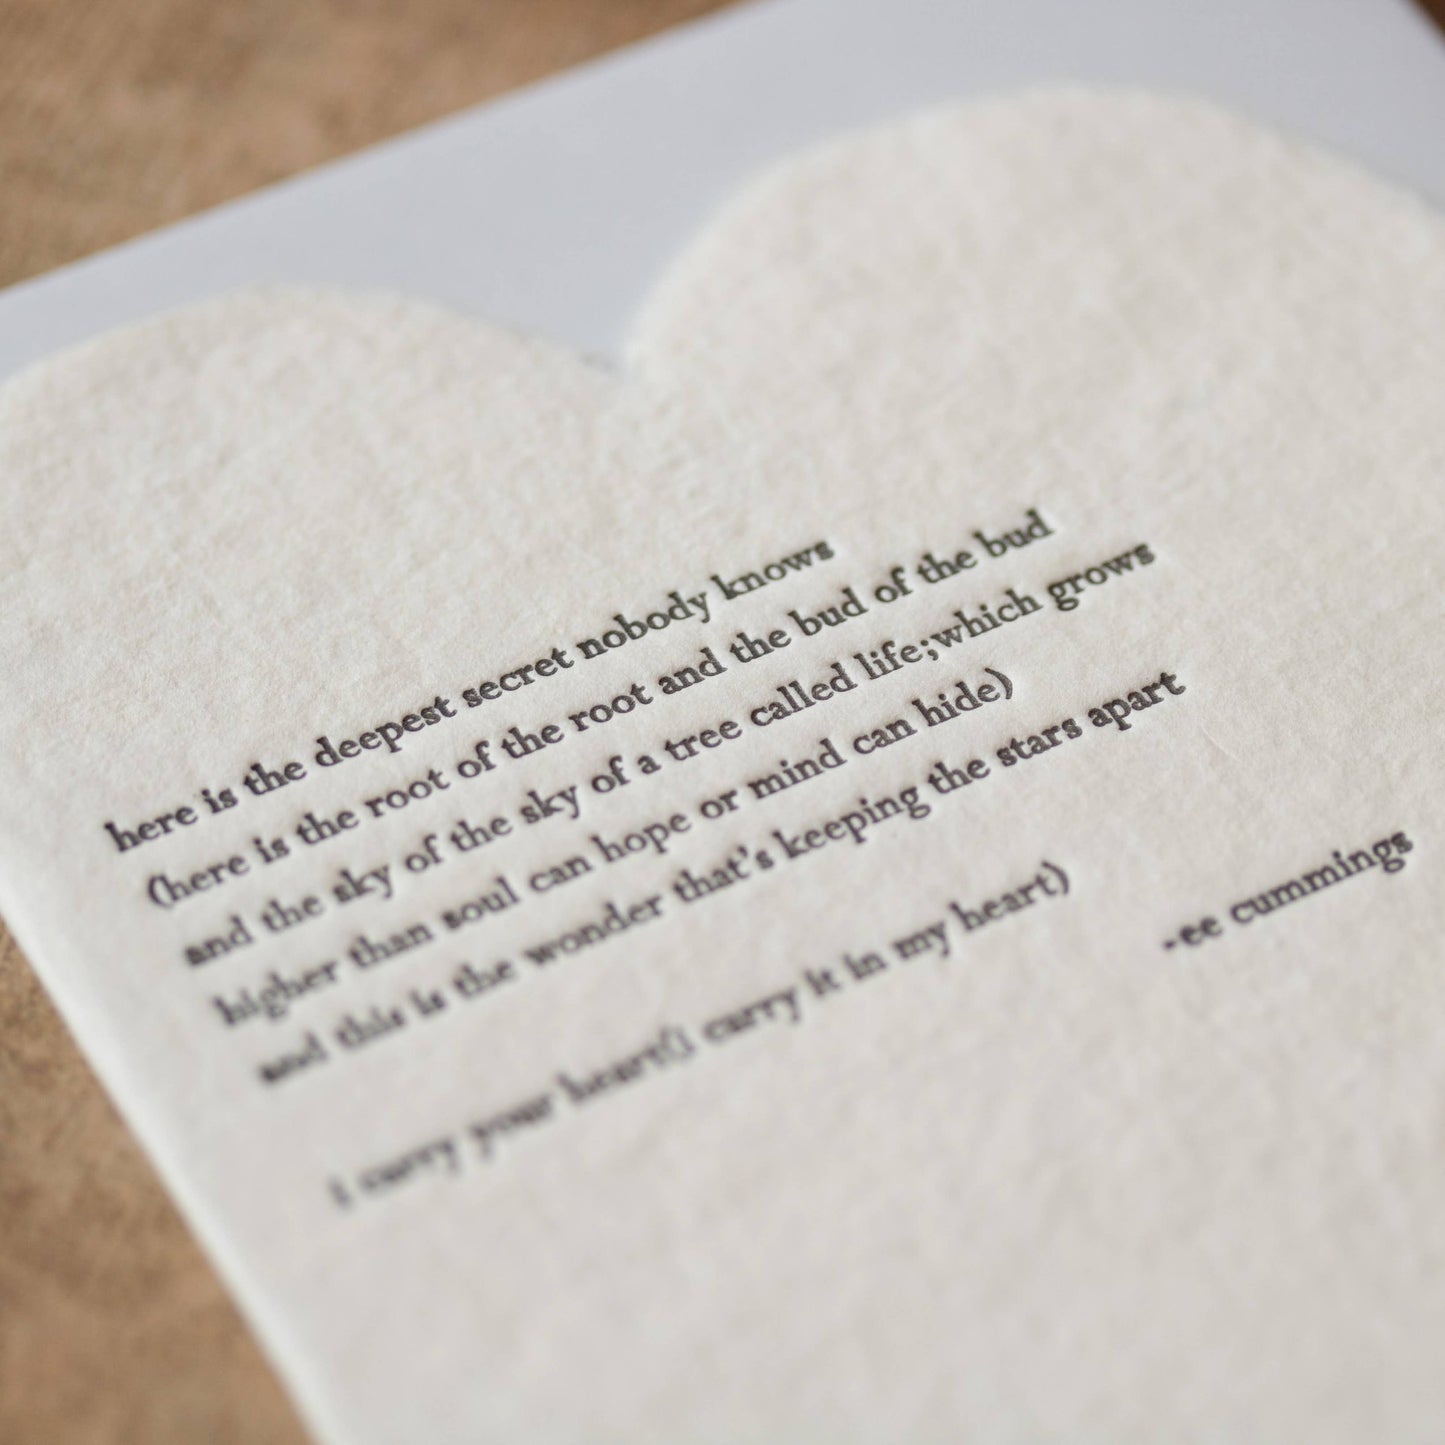 Cummings Quote Heart Handmade Paper Letterpress Seed Card